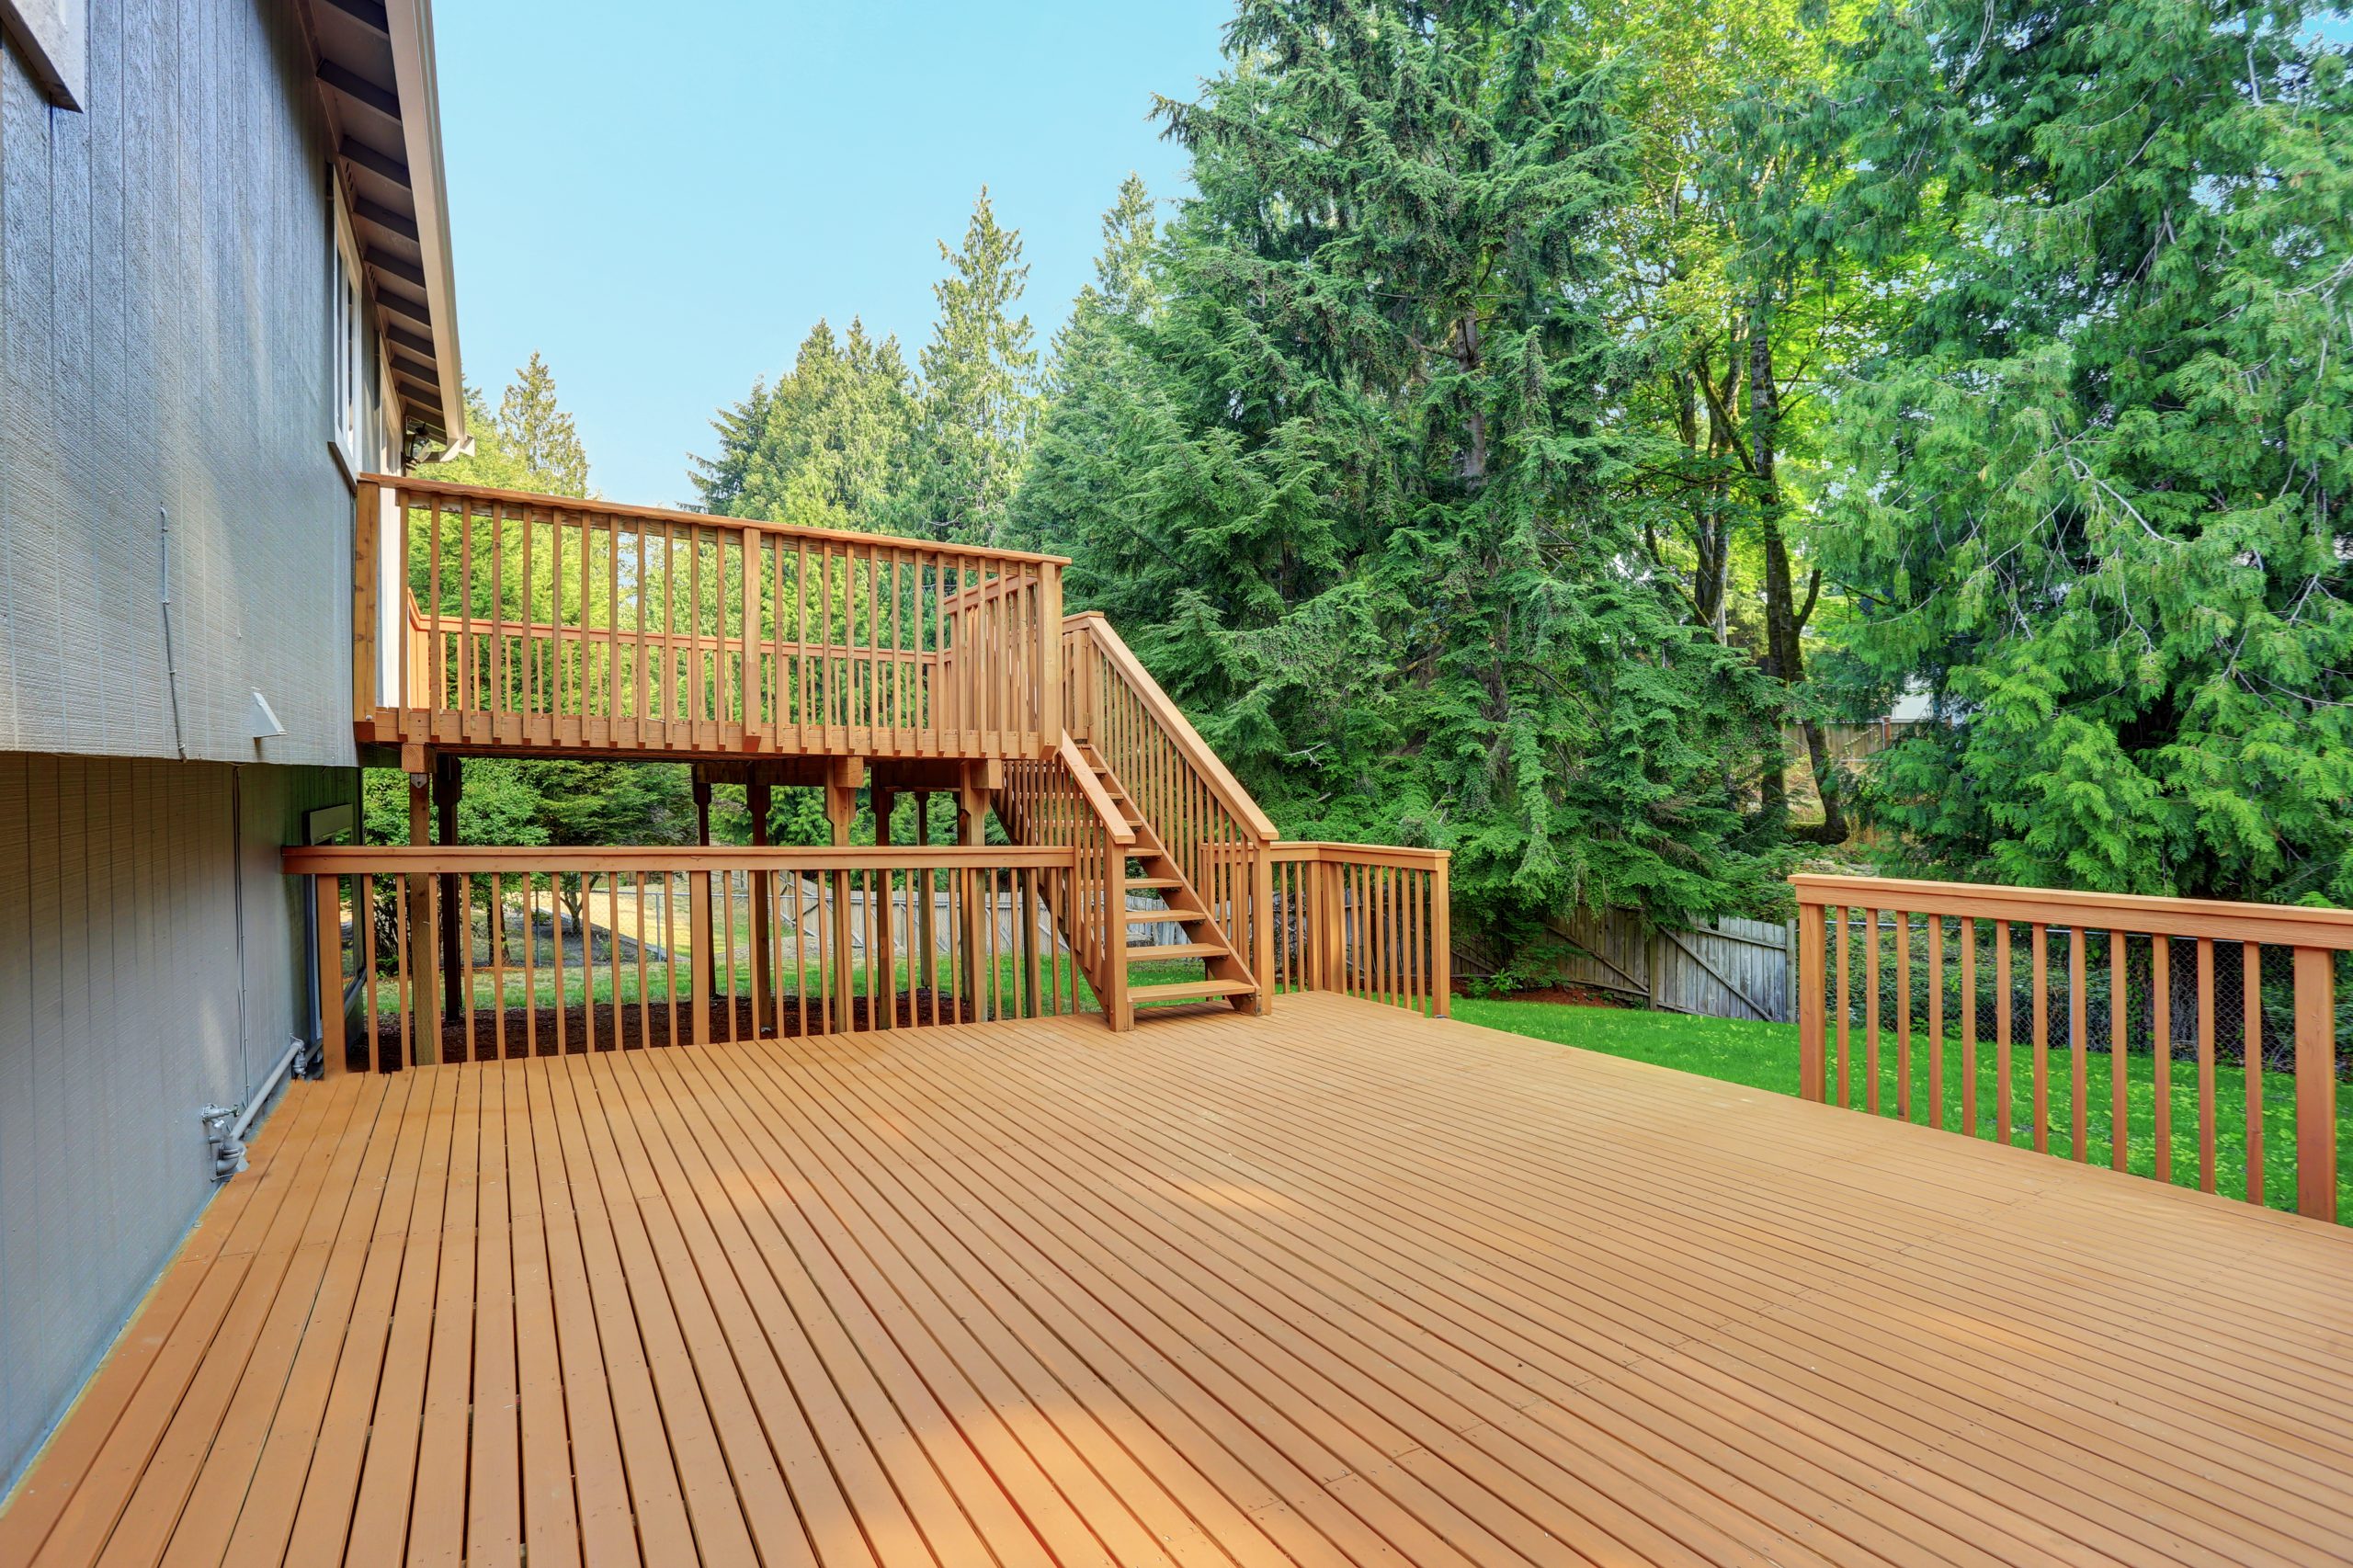 cedar decking deck builder lexington kentucky wood decks contractor contractors professional top quality #1